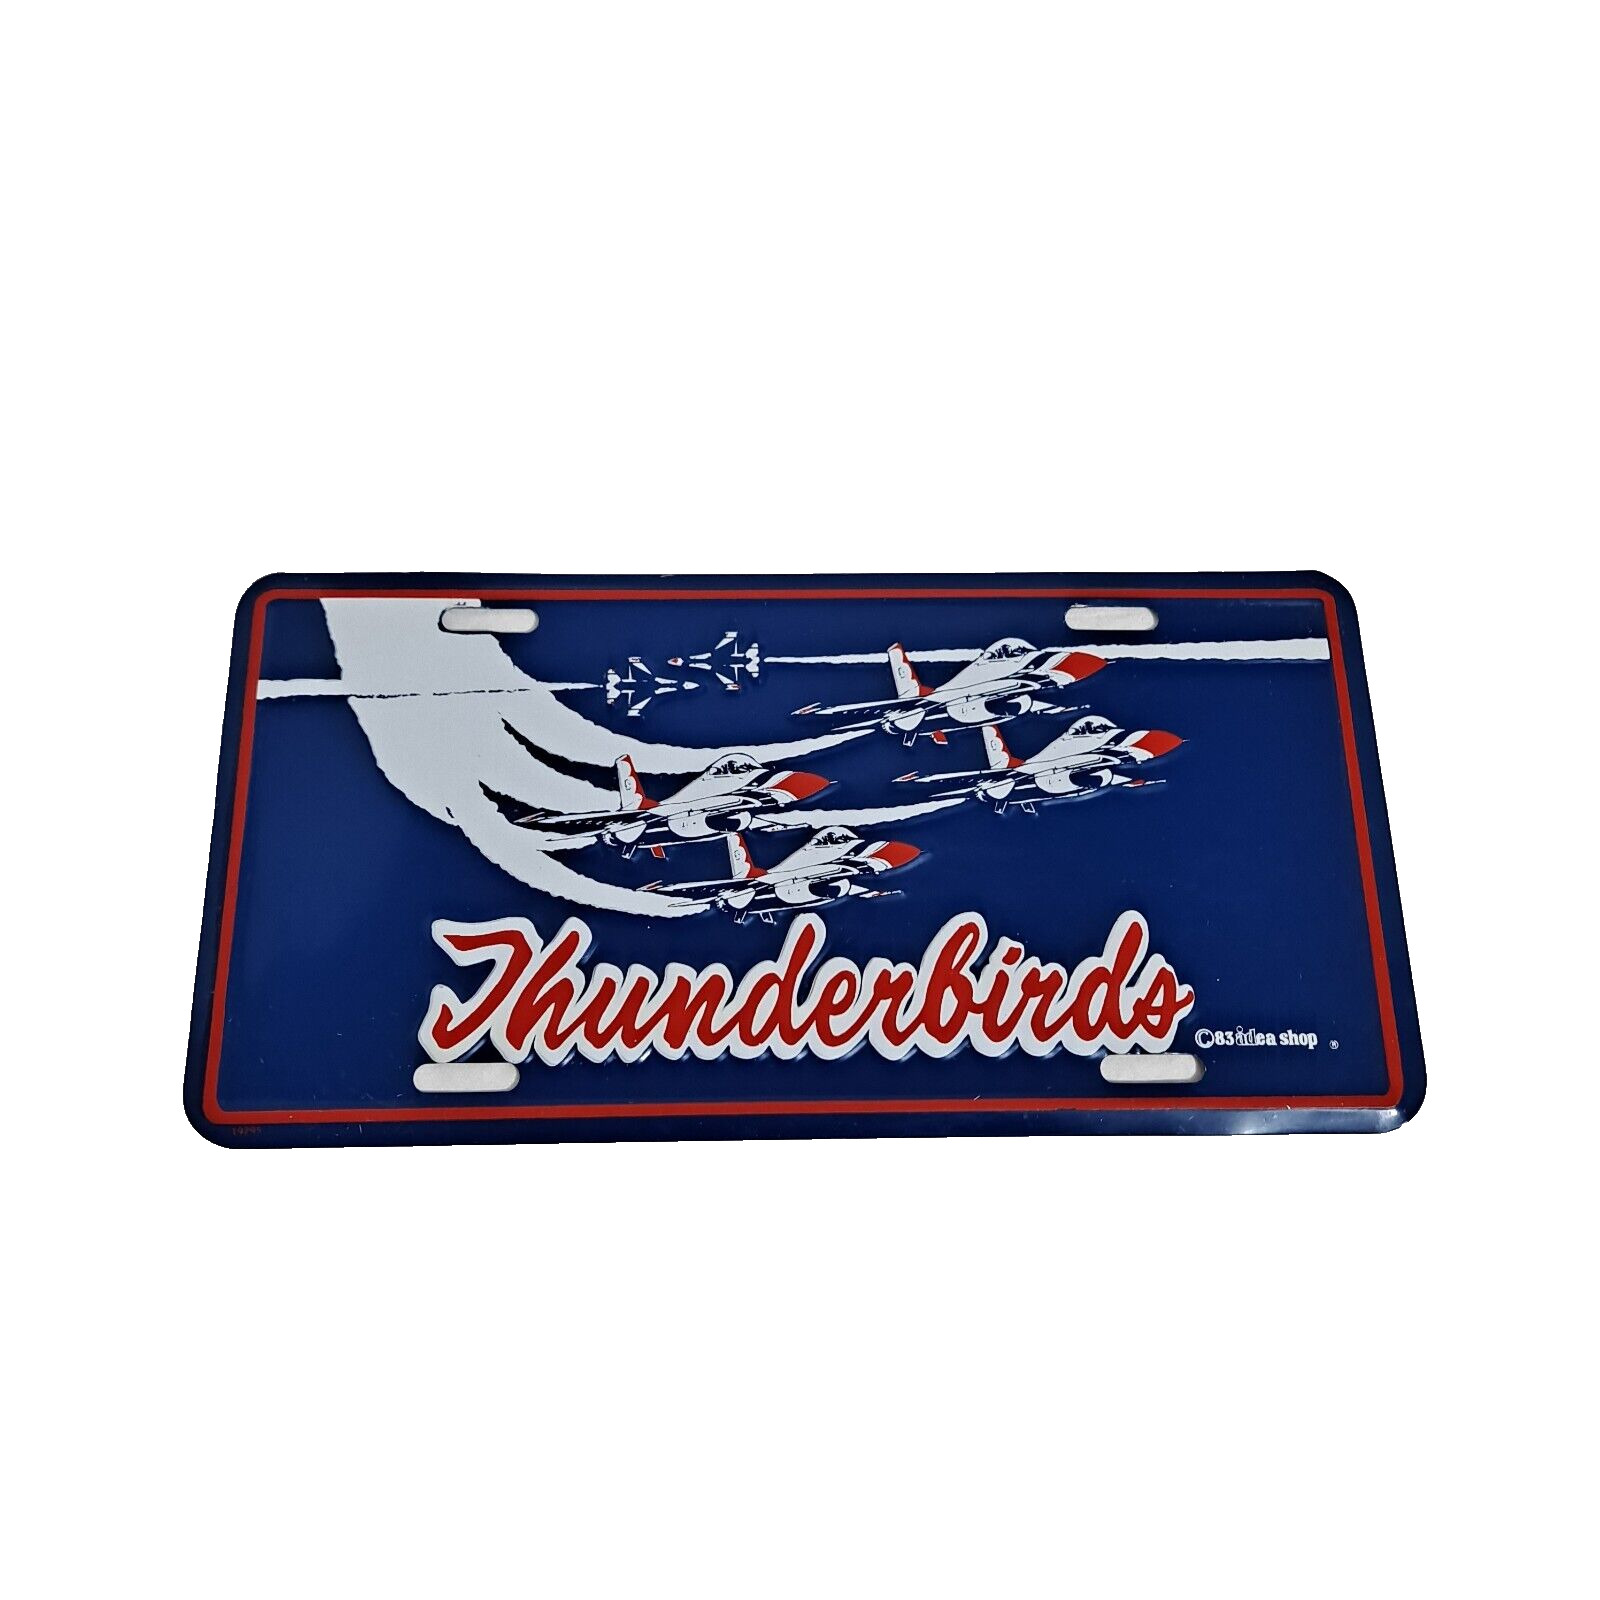 Thunderbirds Vintage License Plate Aluminum Collectable 83adea Shop